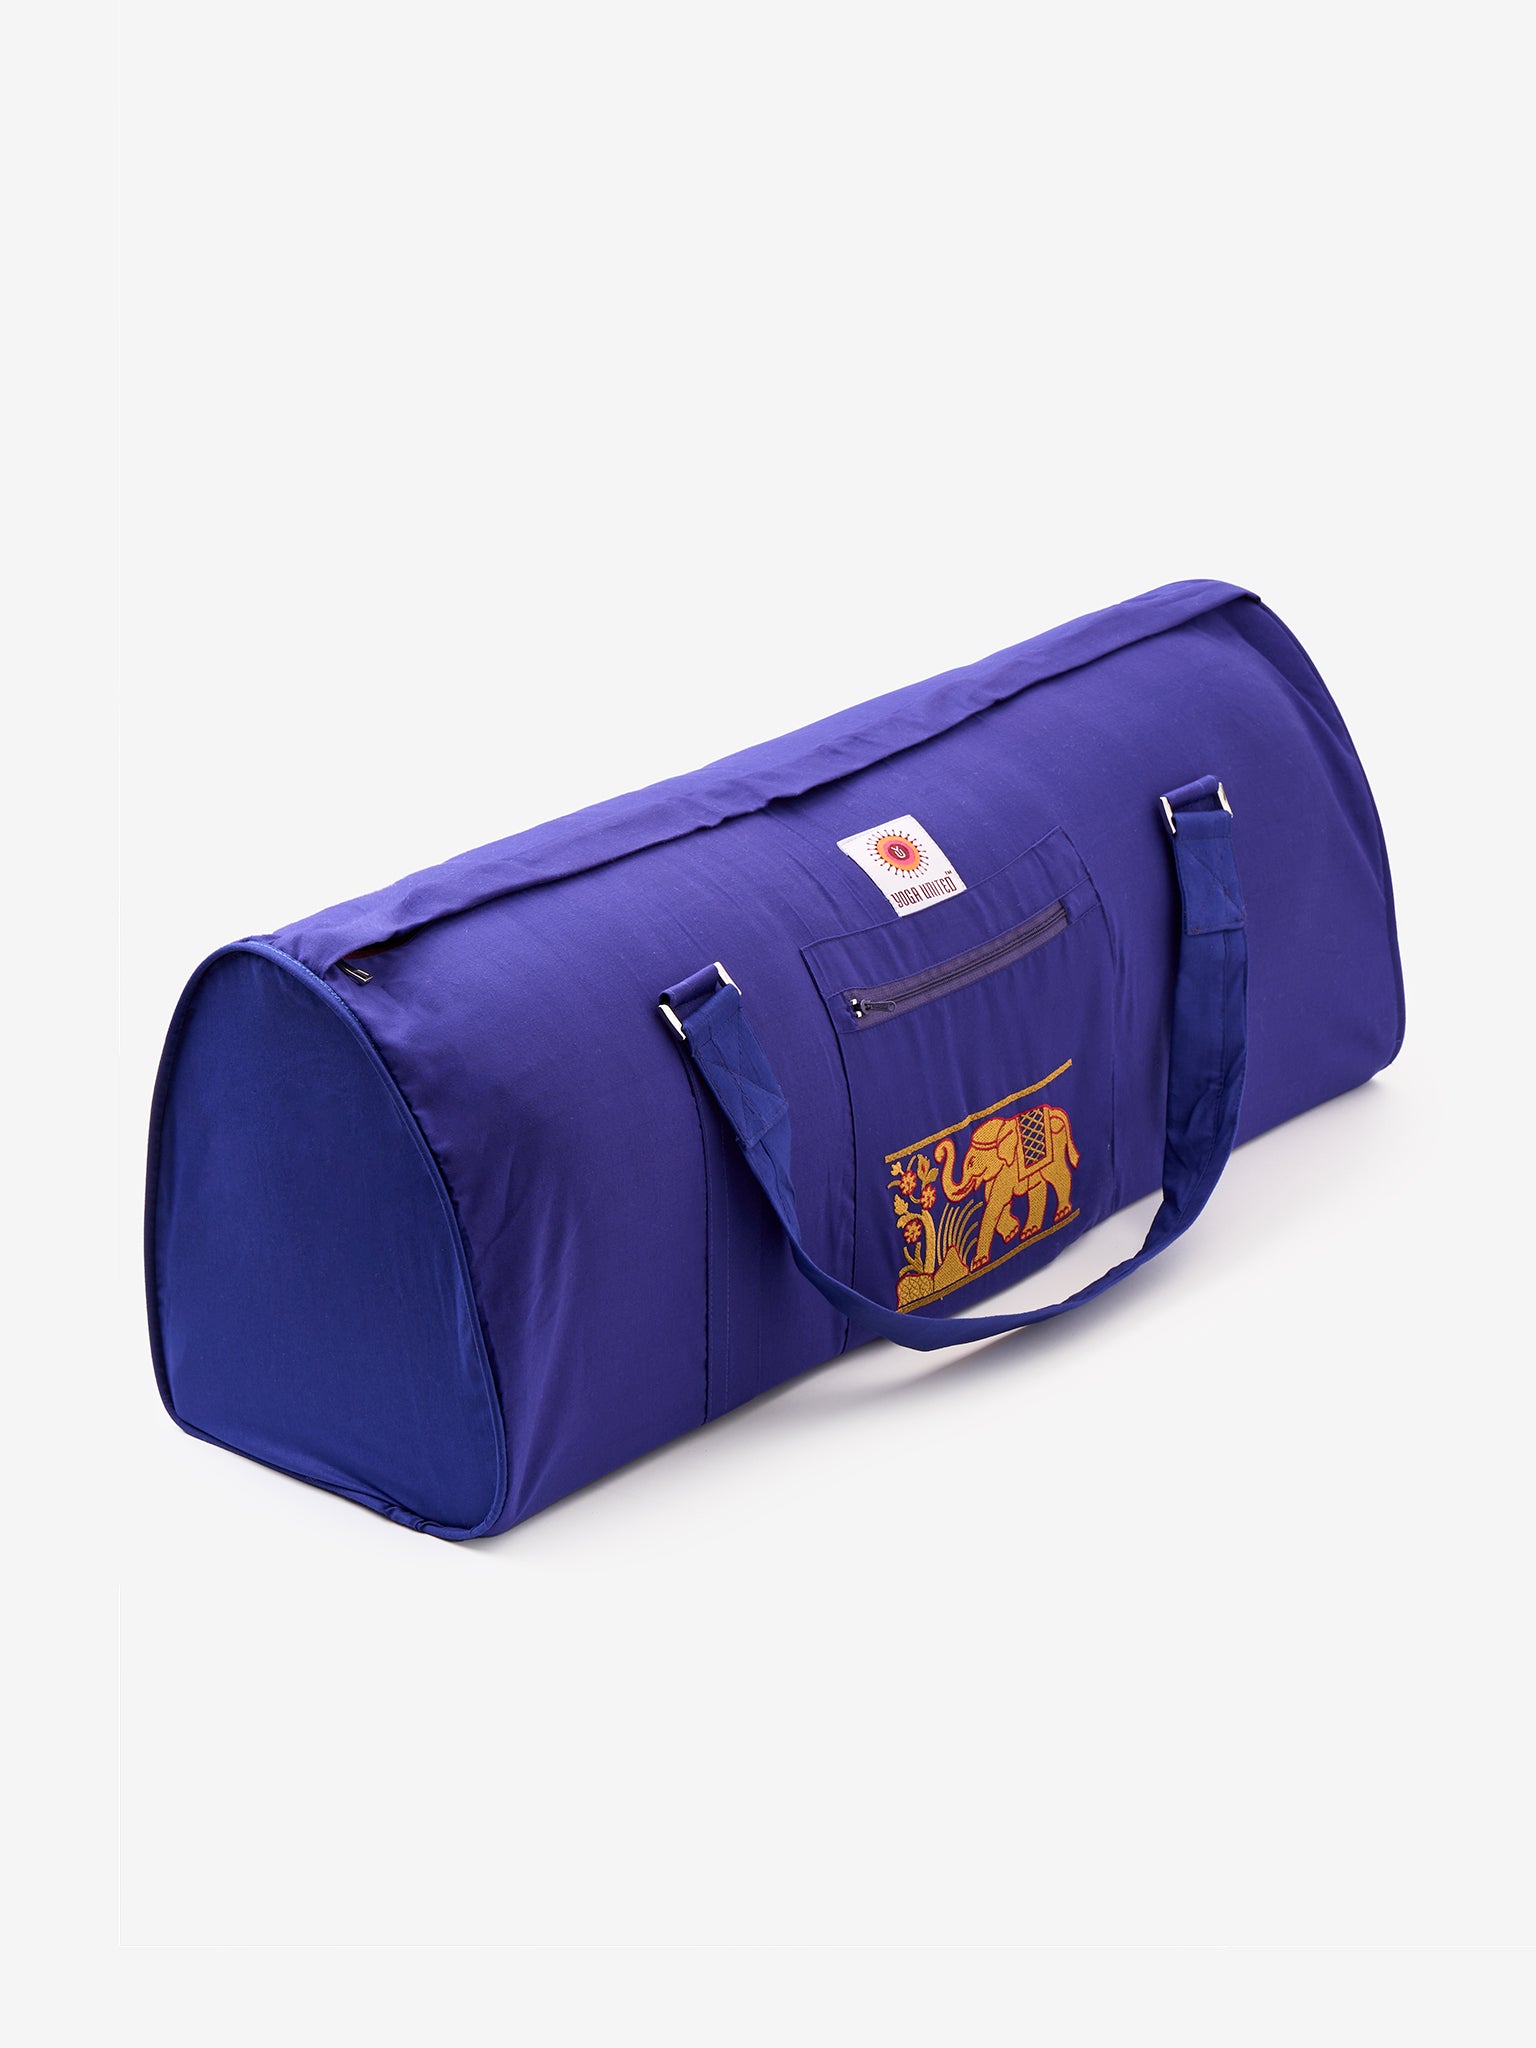 Yoga United Yoga Kit Bag - roomy bag with padded carrier handles –  Yogamatters